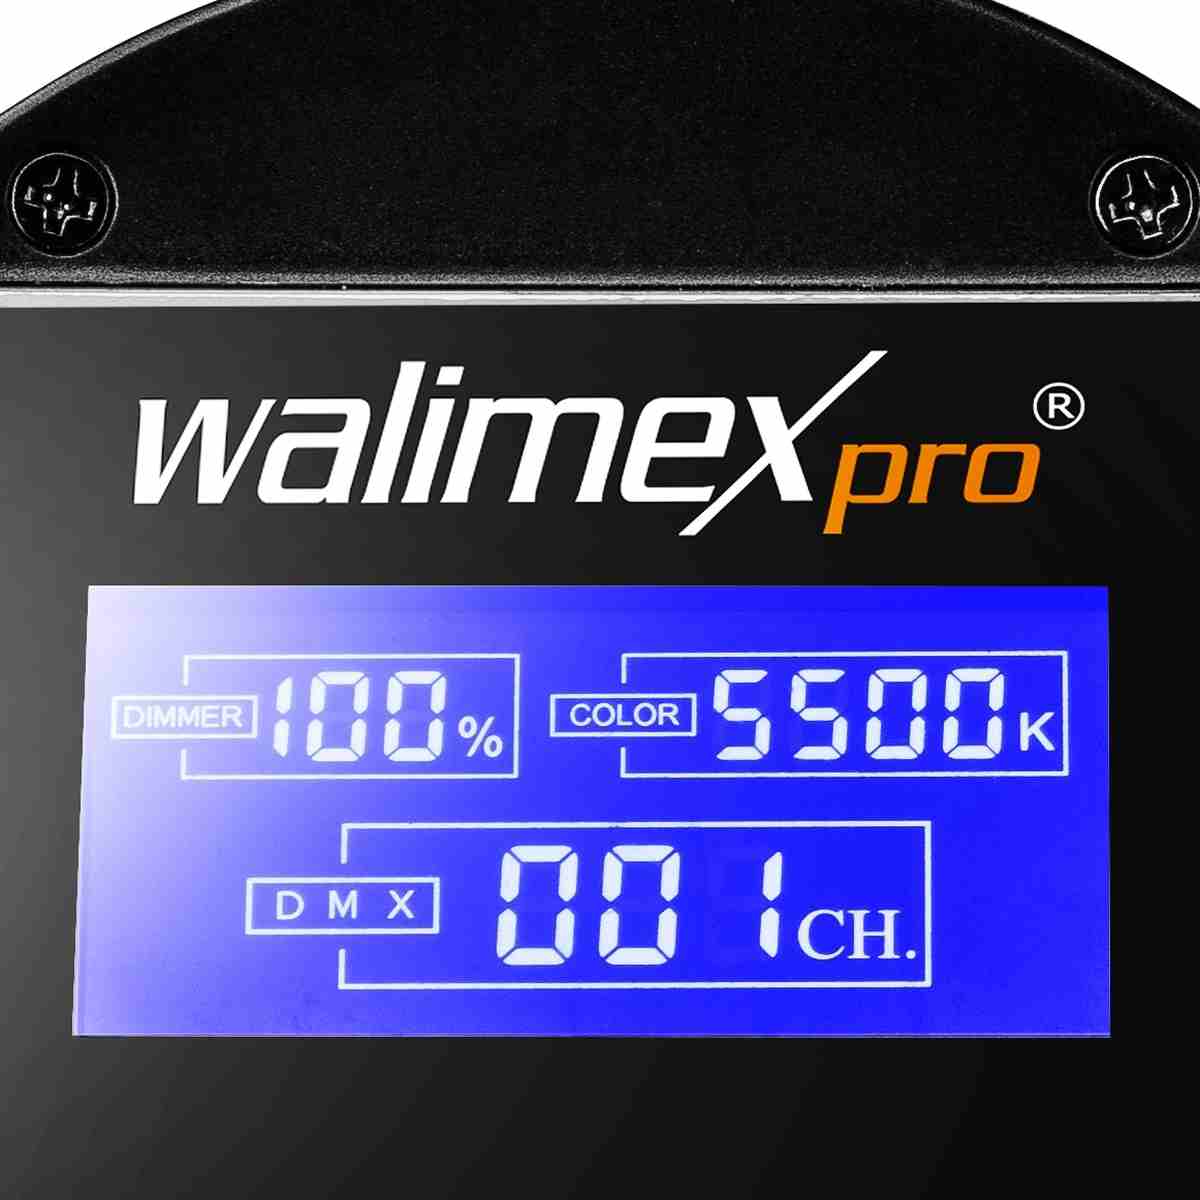 Walimex pro Fresnel LED FLB-100 Bi Color Brightlight